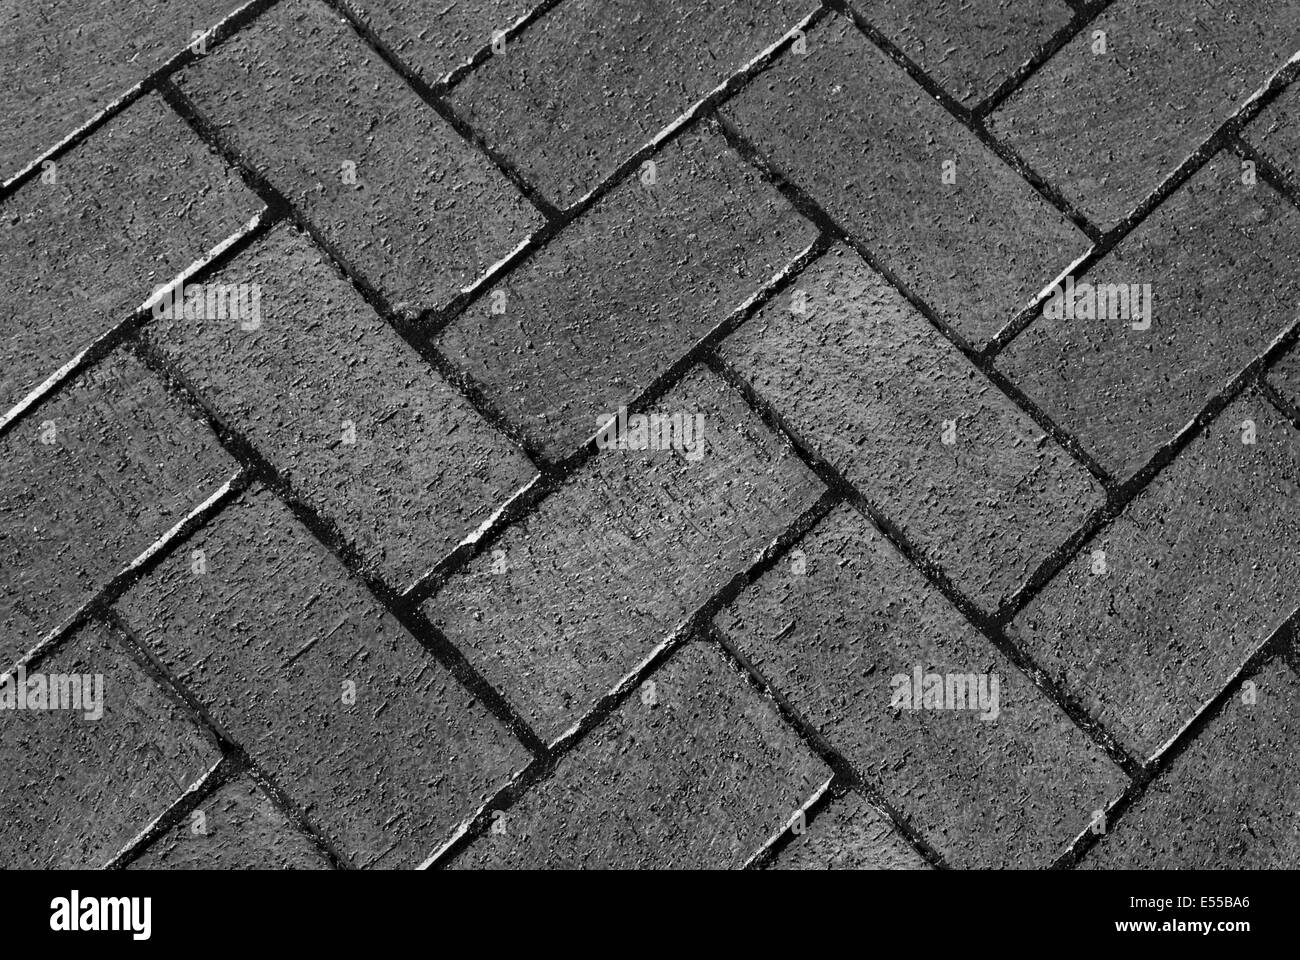 Black and White Parquet brickwork Stock Photo